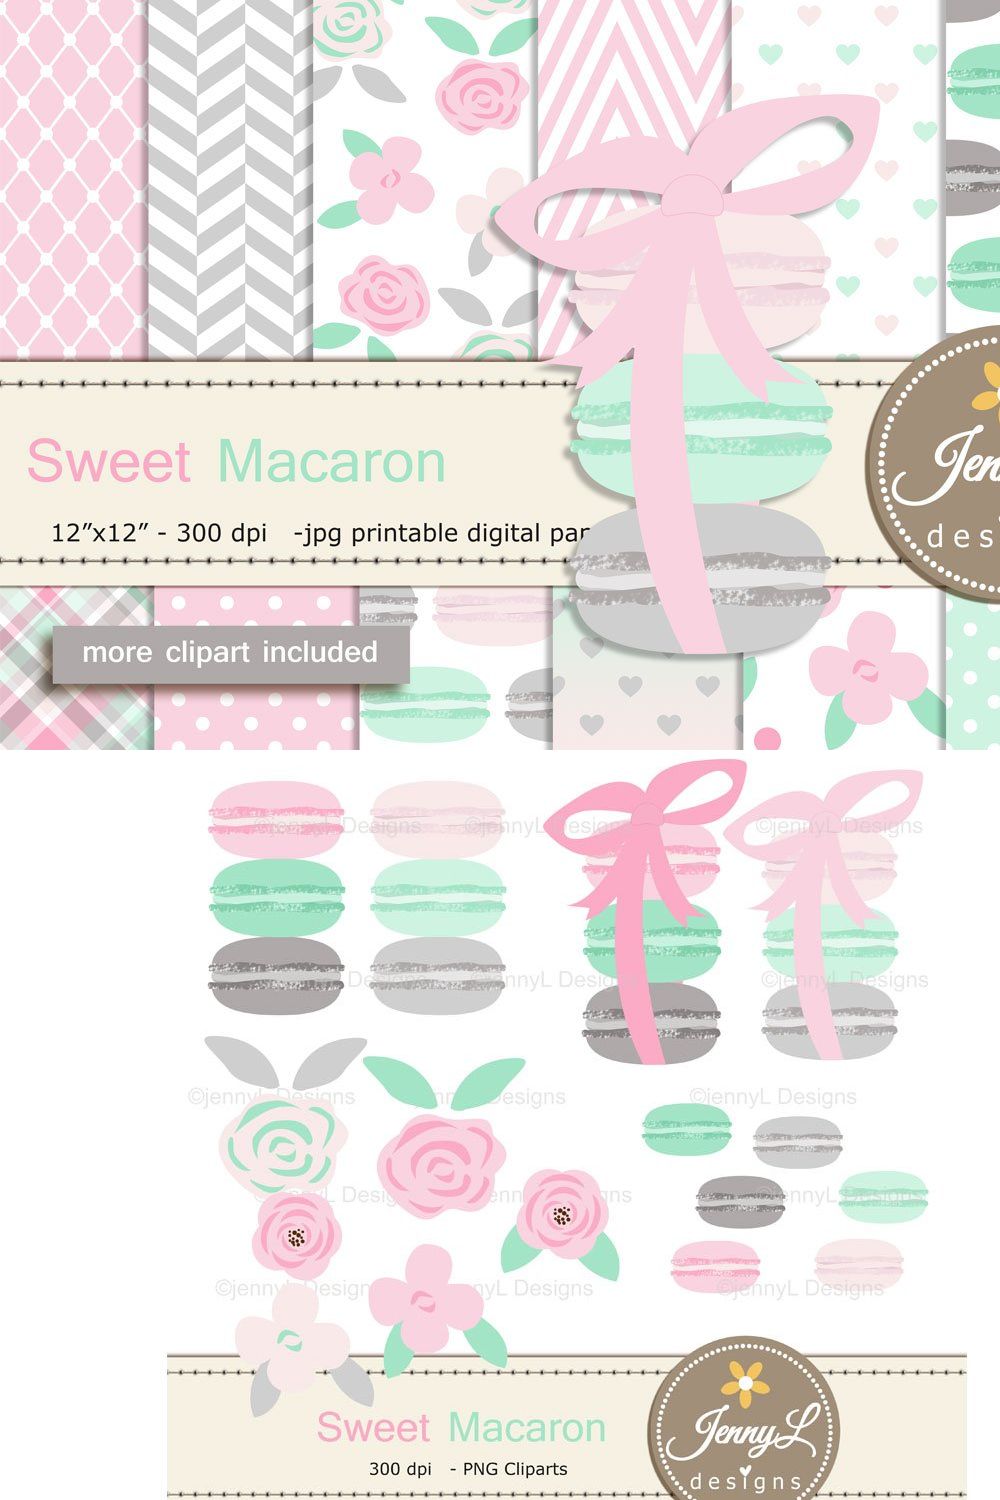 Macaron Digital Paper & Clipart pinterest preview image.